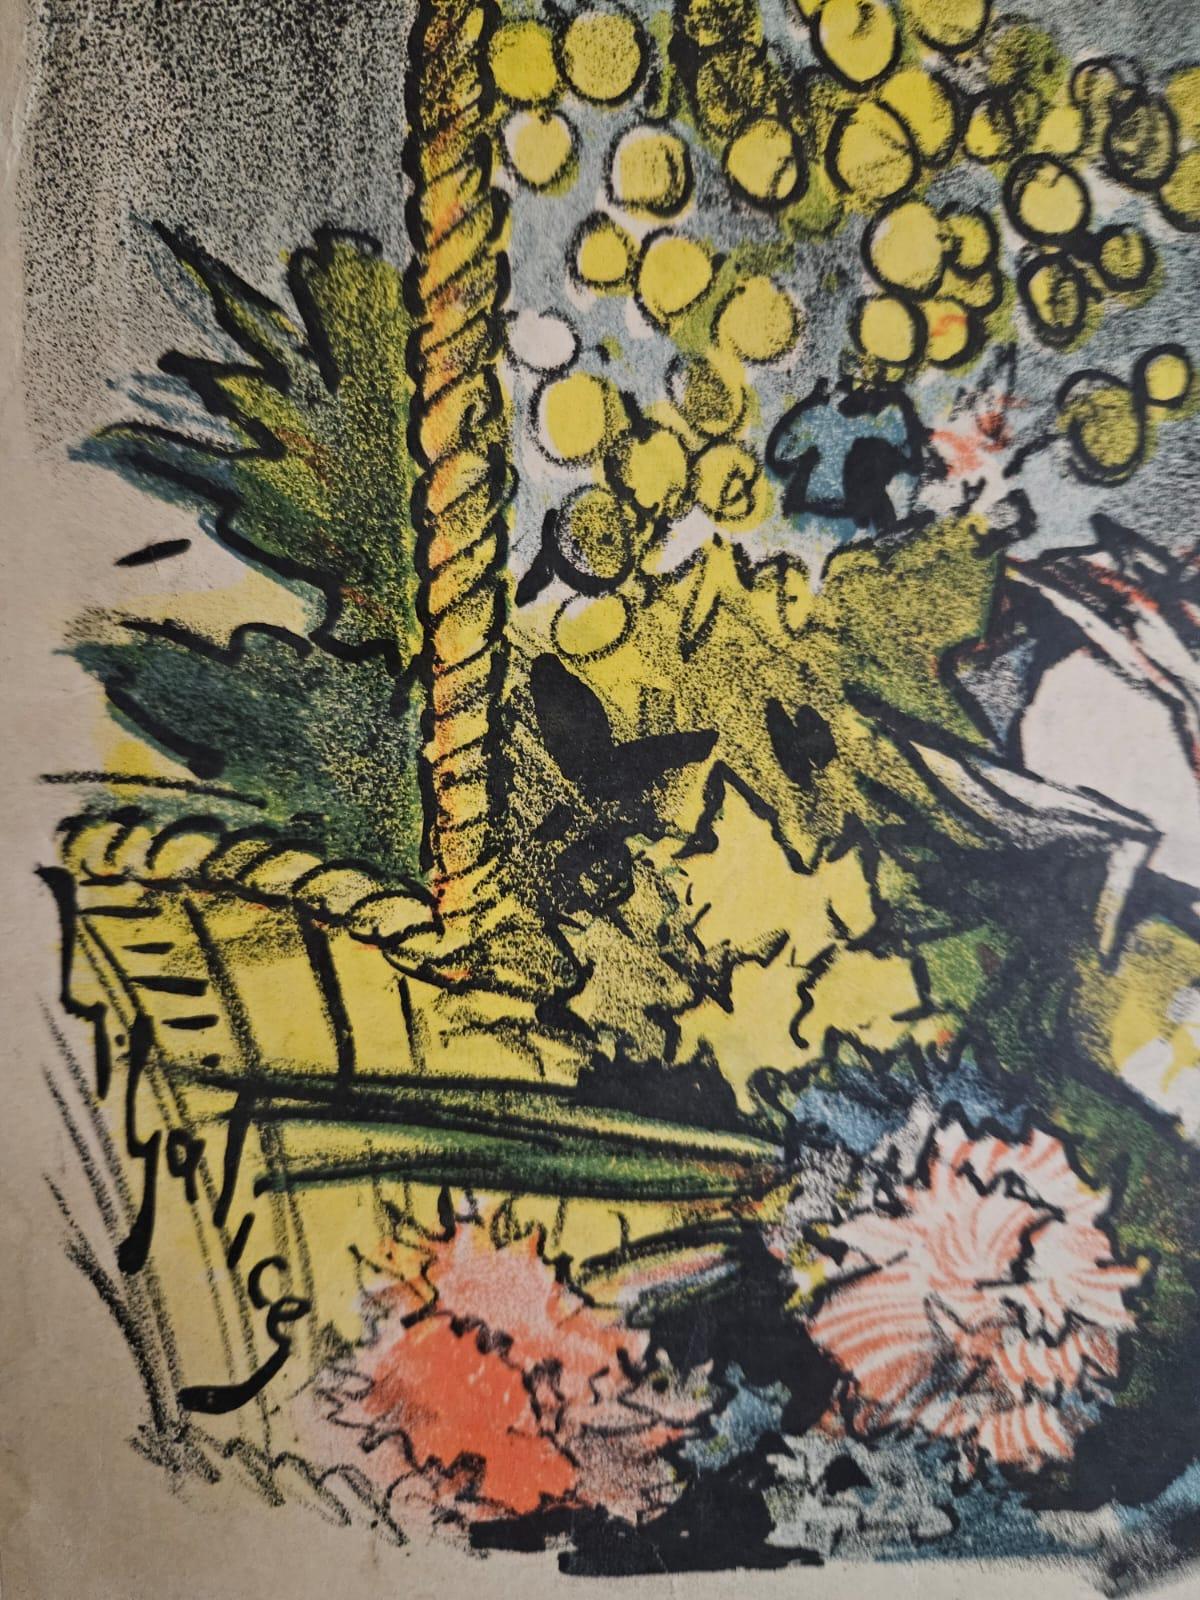 1893 Original poster by Louis Galice for the Bois de Boulogne flower festival For Sale 2